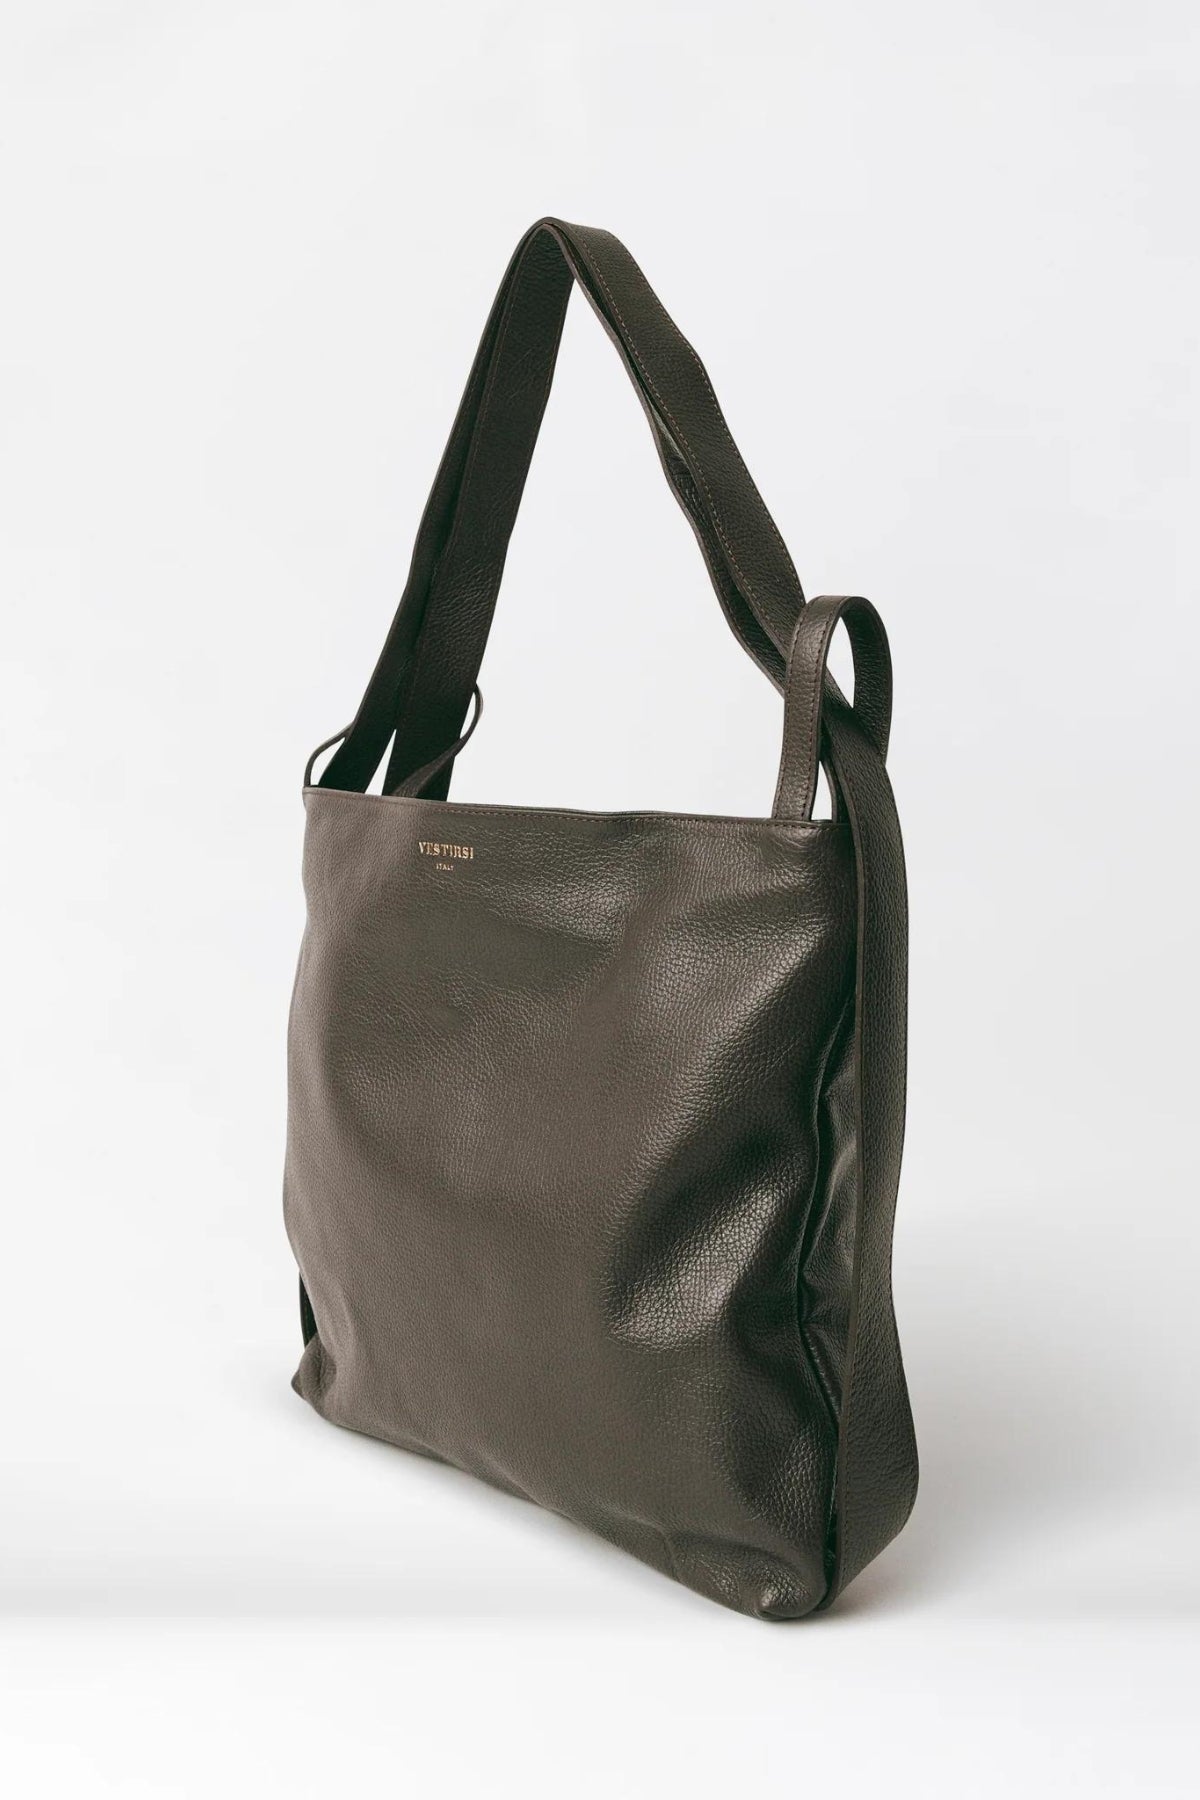 Bella Dark Chocolate 2-in-1 Convertible Backpack Tote